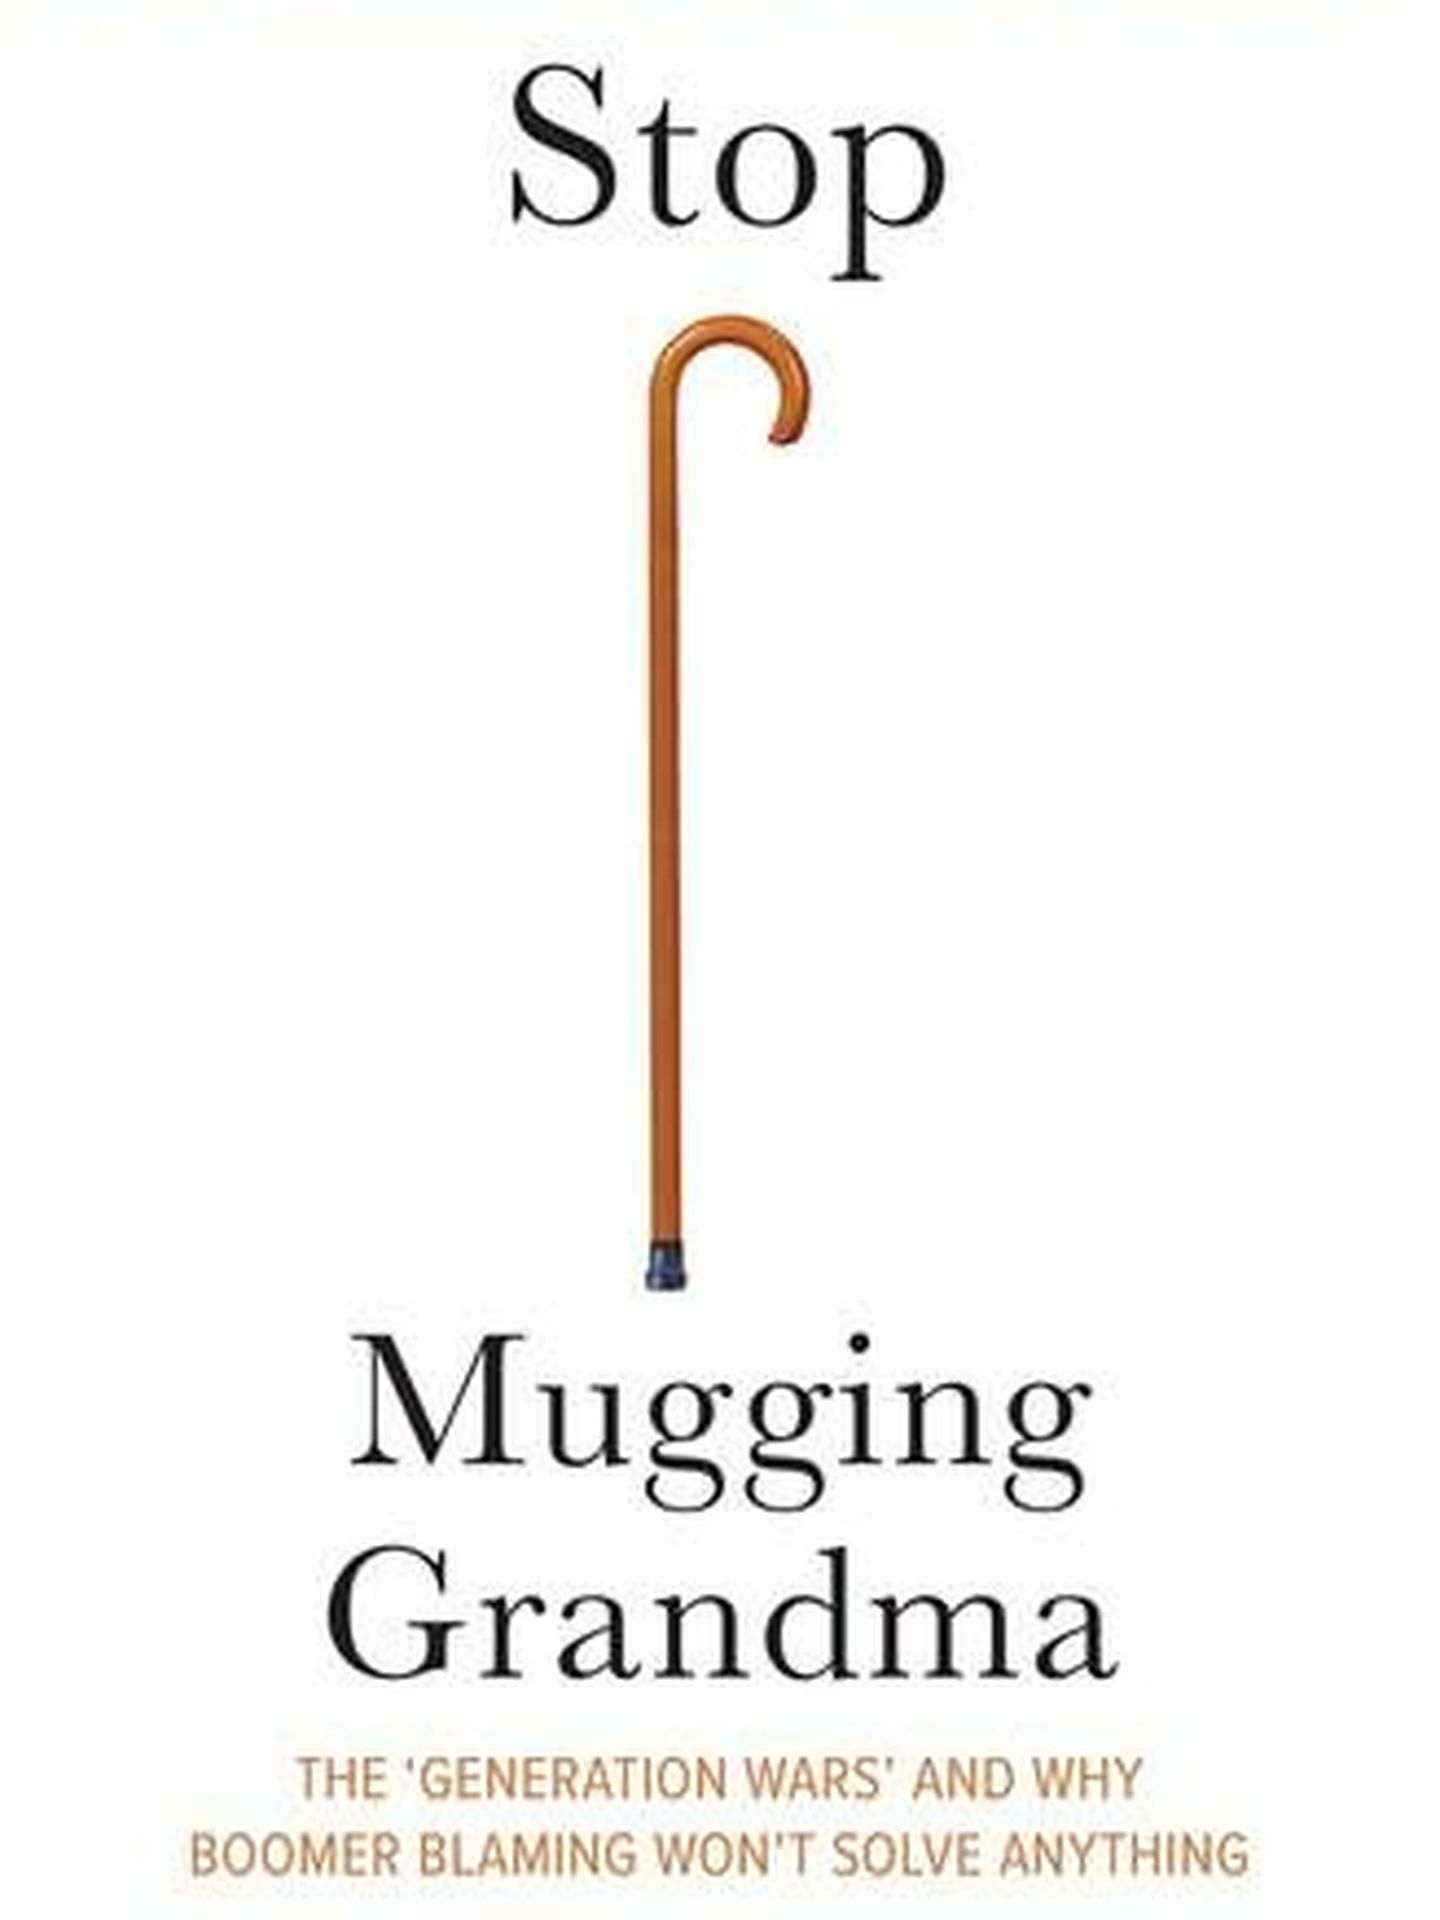 Portada de 'Stop mugging Grandma'. (Yale)